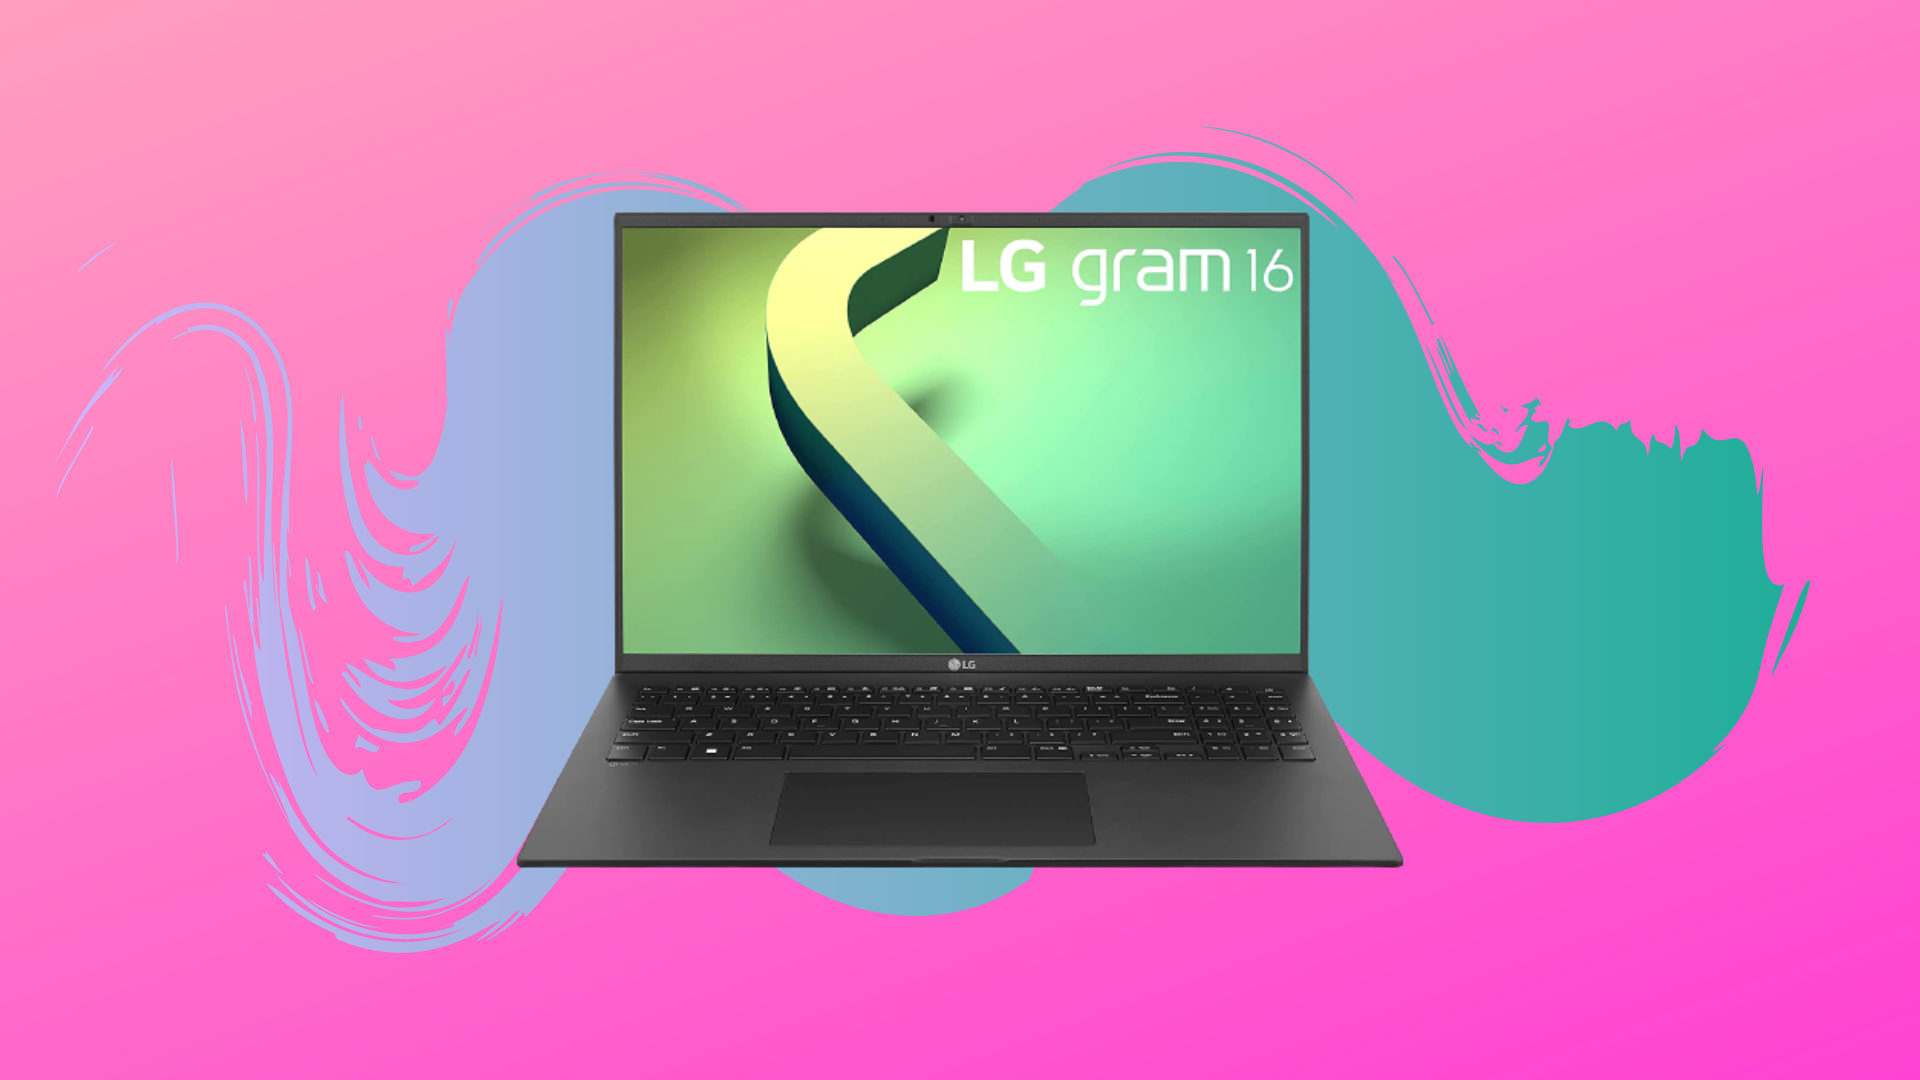 LG gram 16-inch lightweight laptop